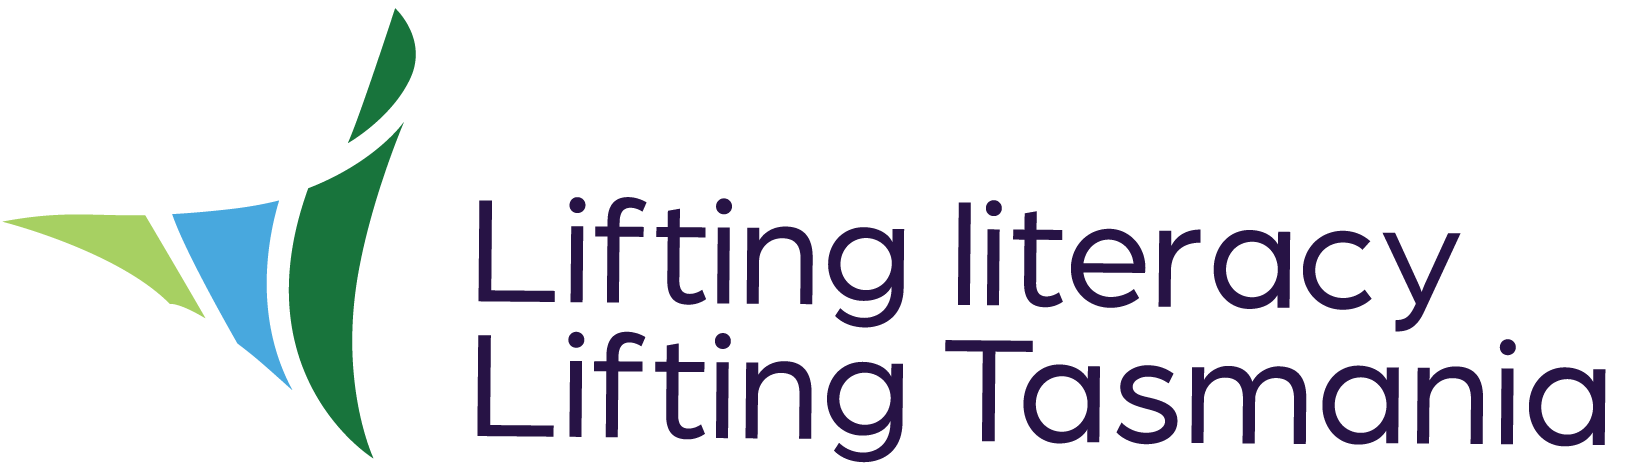 Literacy Advisory Panel logo